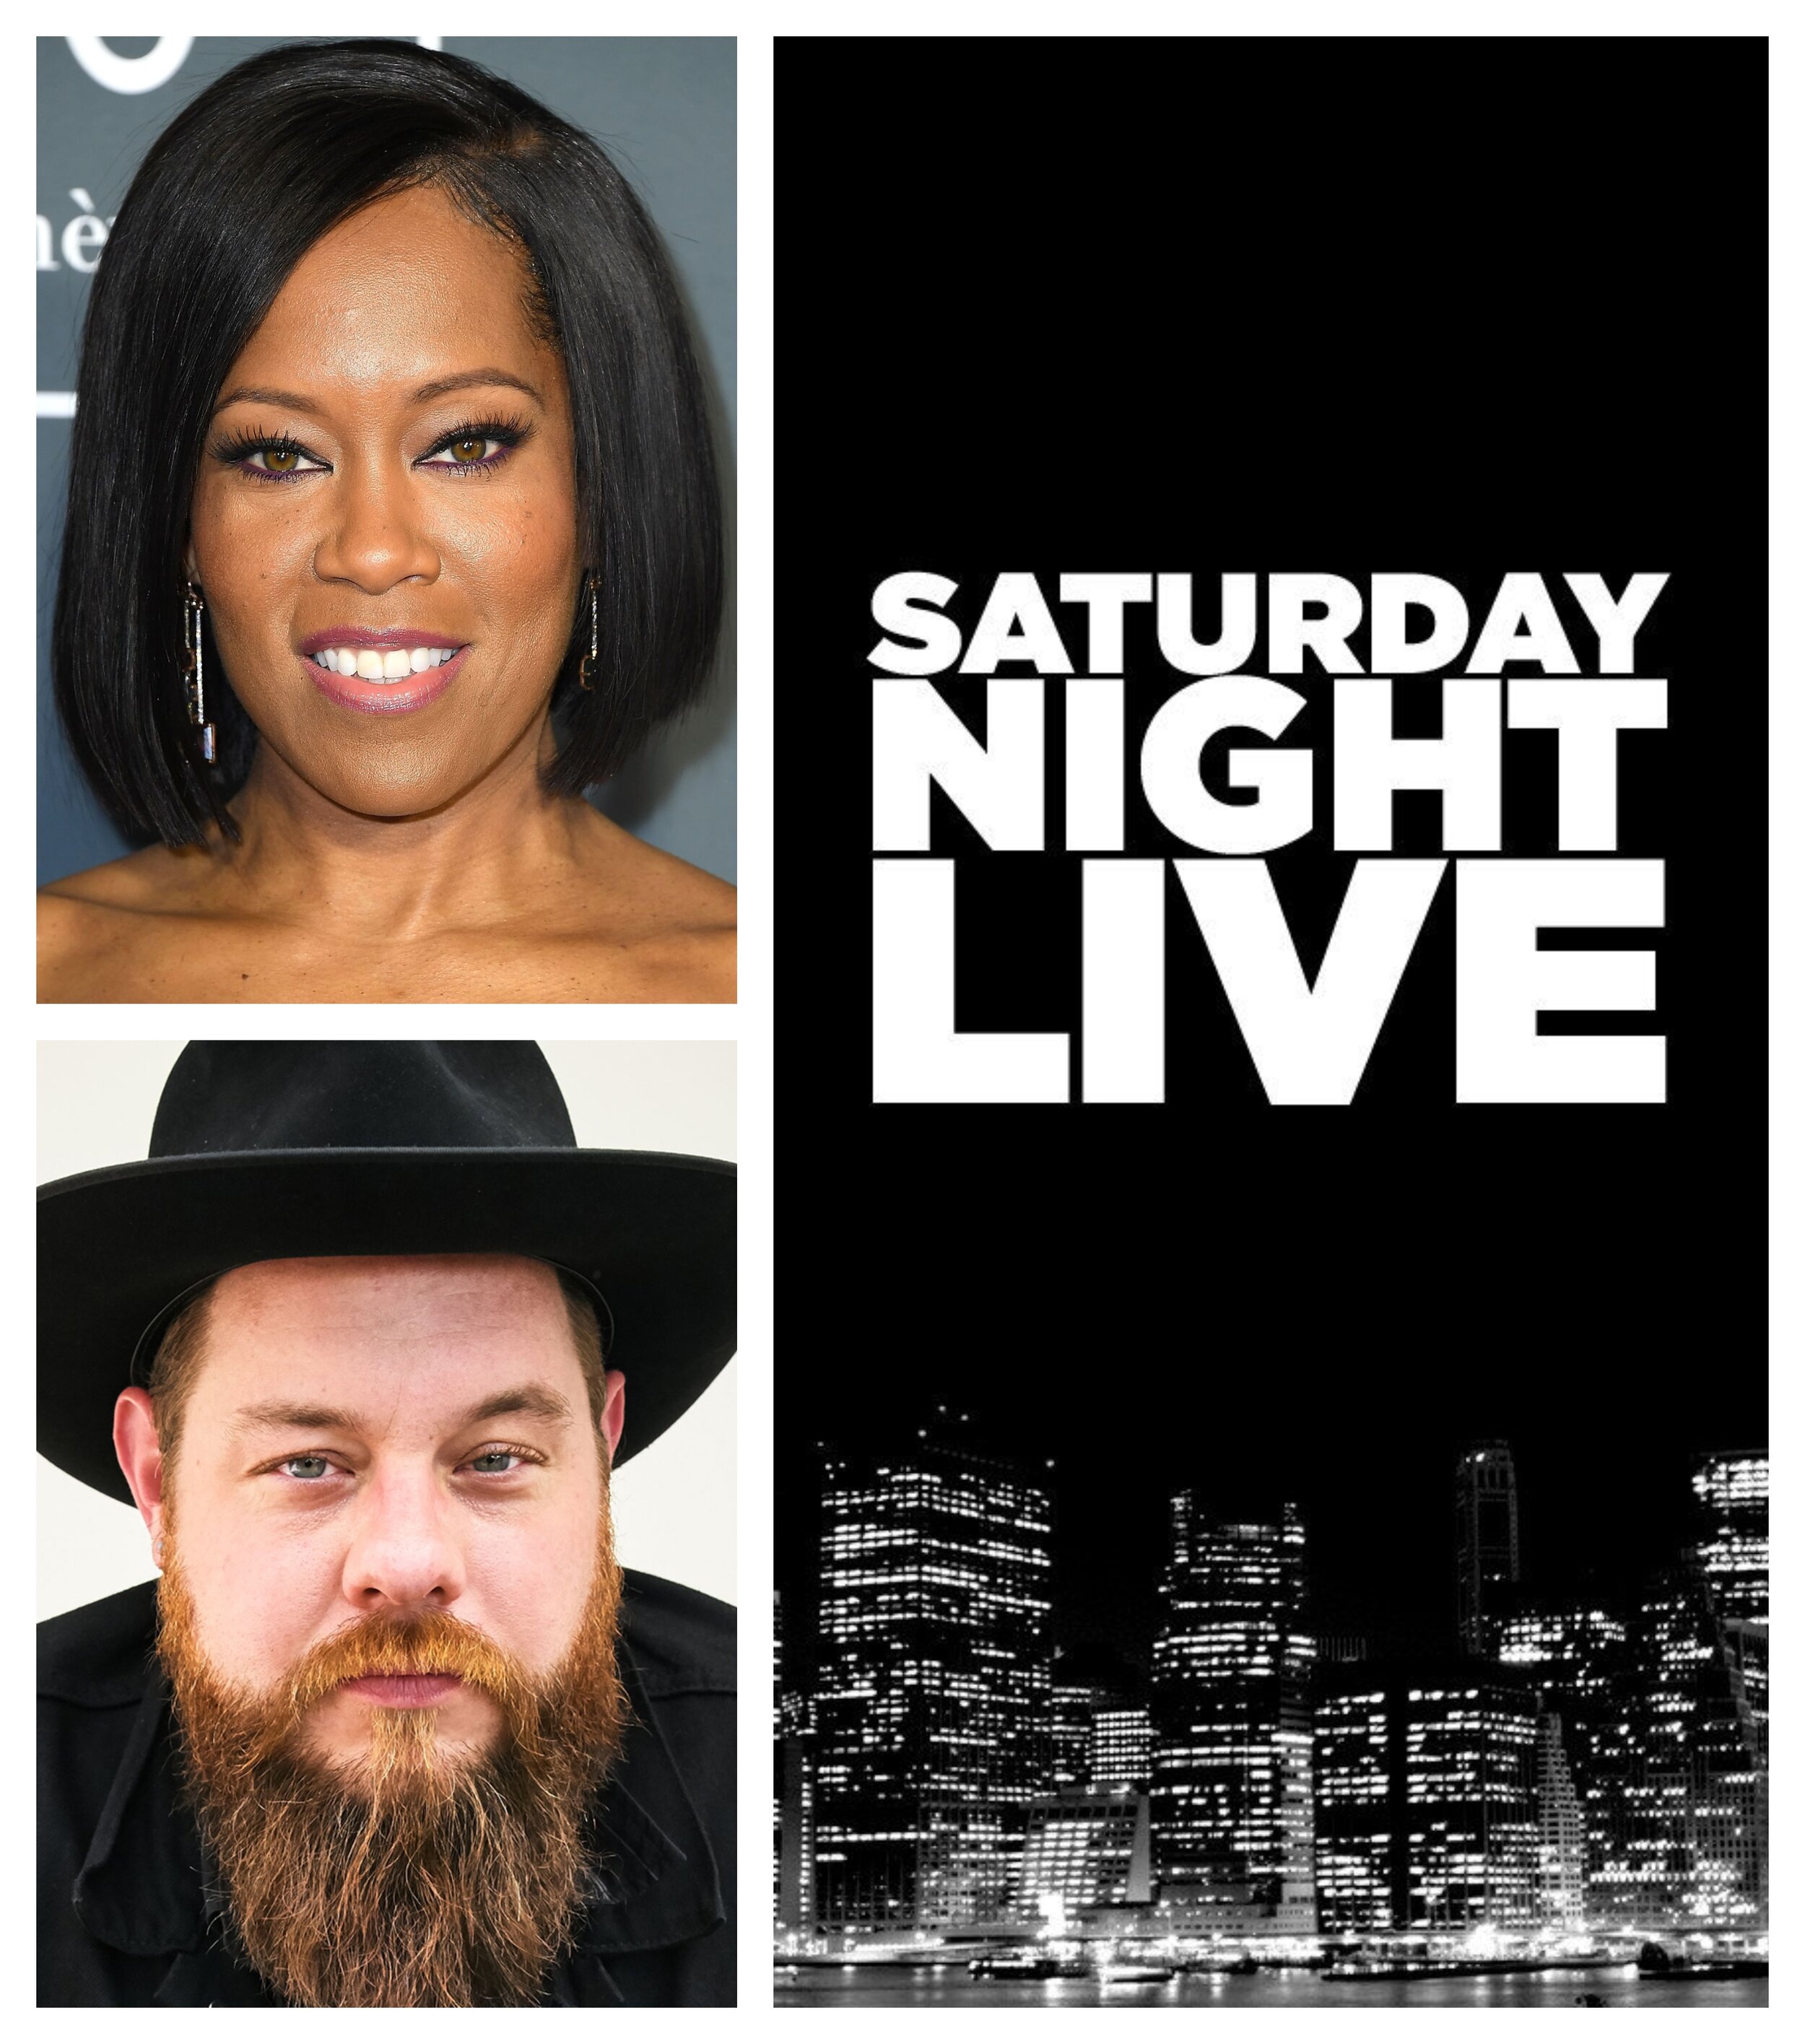 Regina King to host 'Saturday Night Live' on February 13